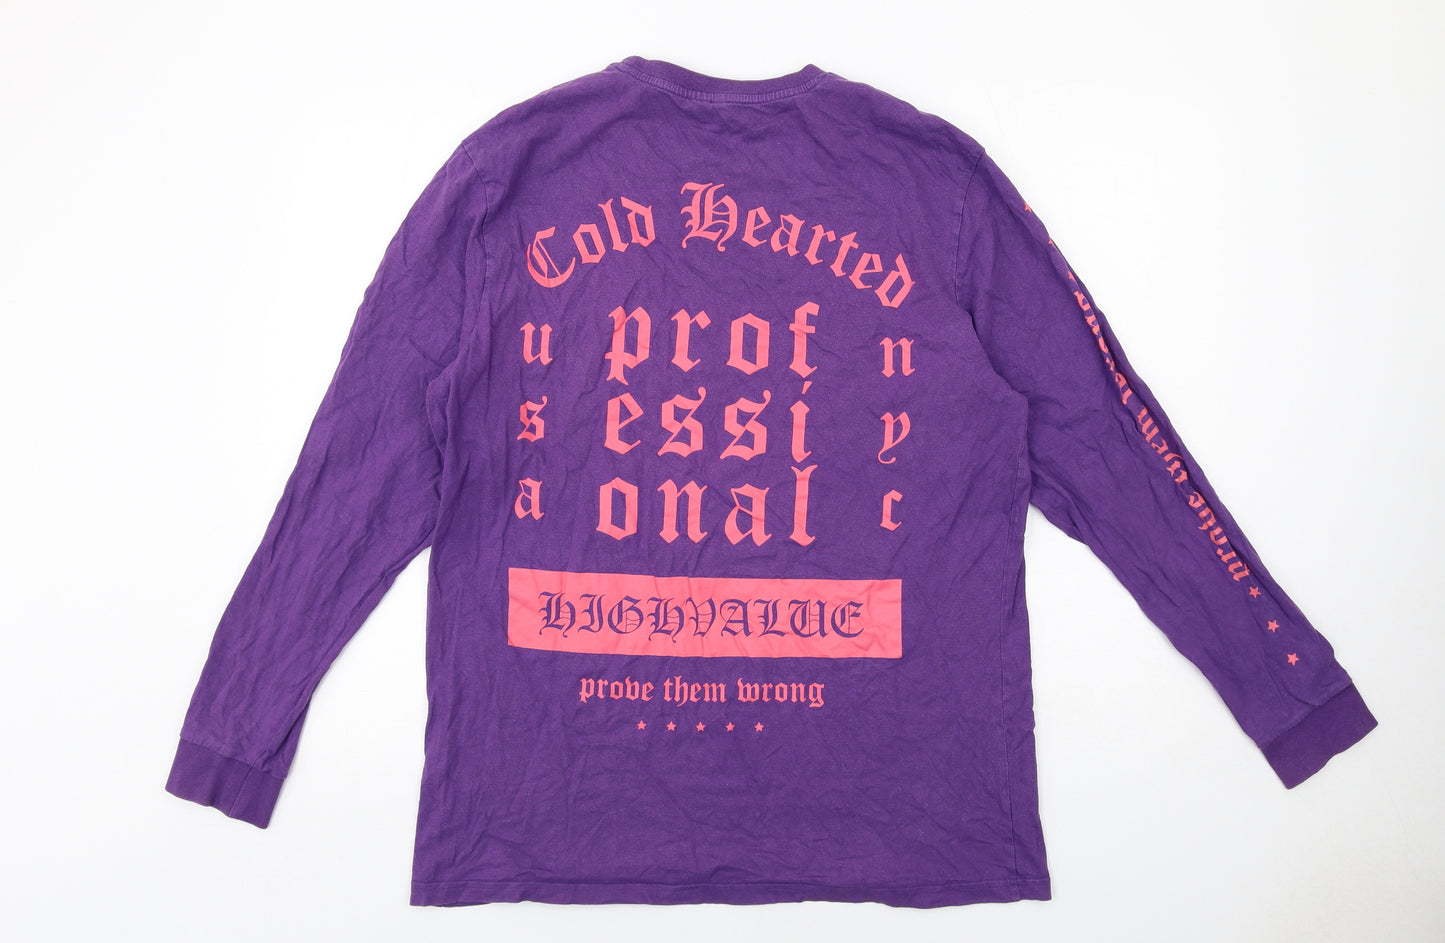 H&M Womens Purple Cotton Basic T-Shirt Size L Crew Neck - Cold Hearted